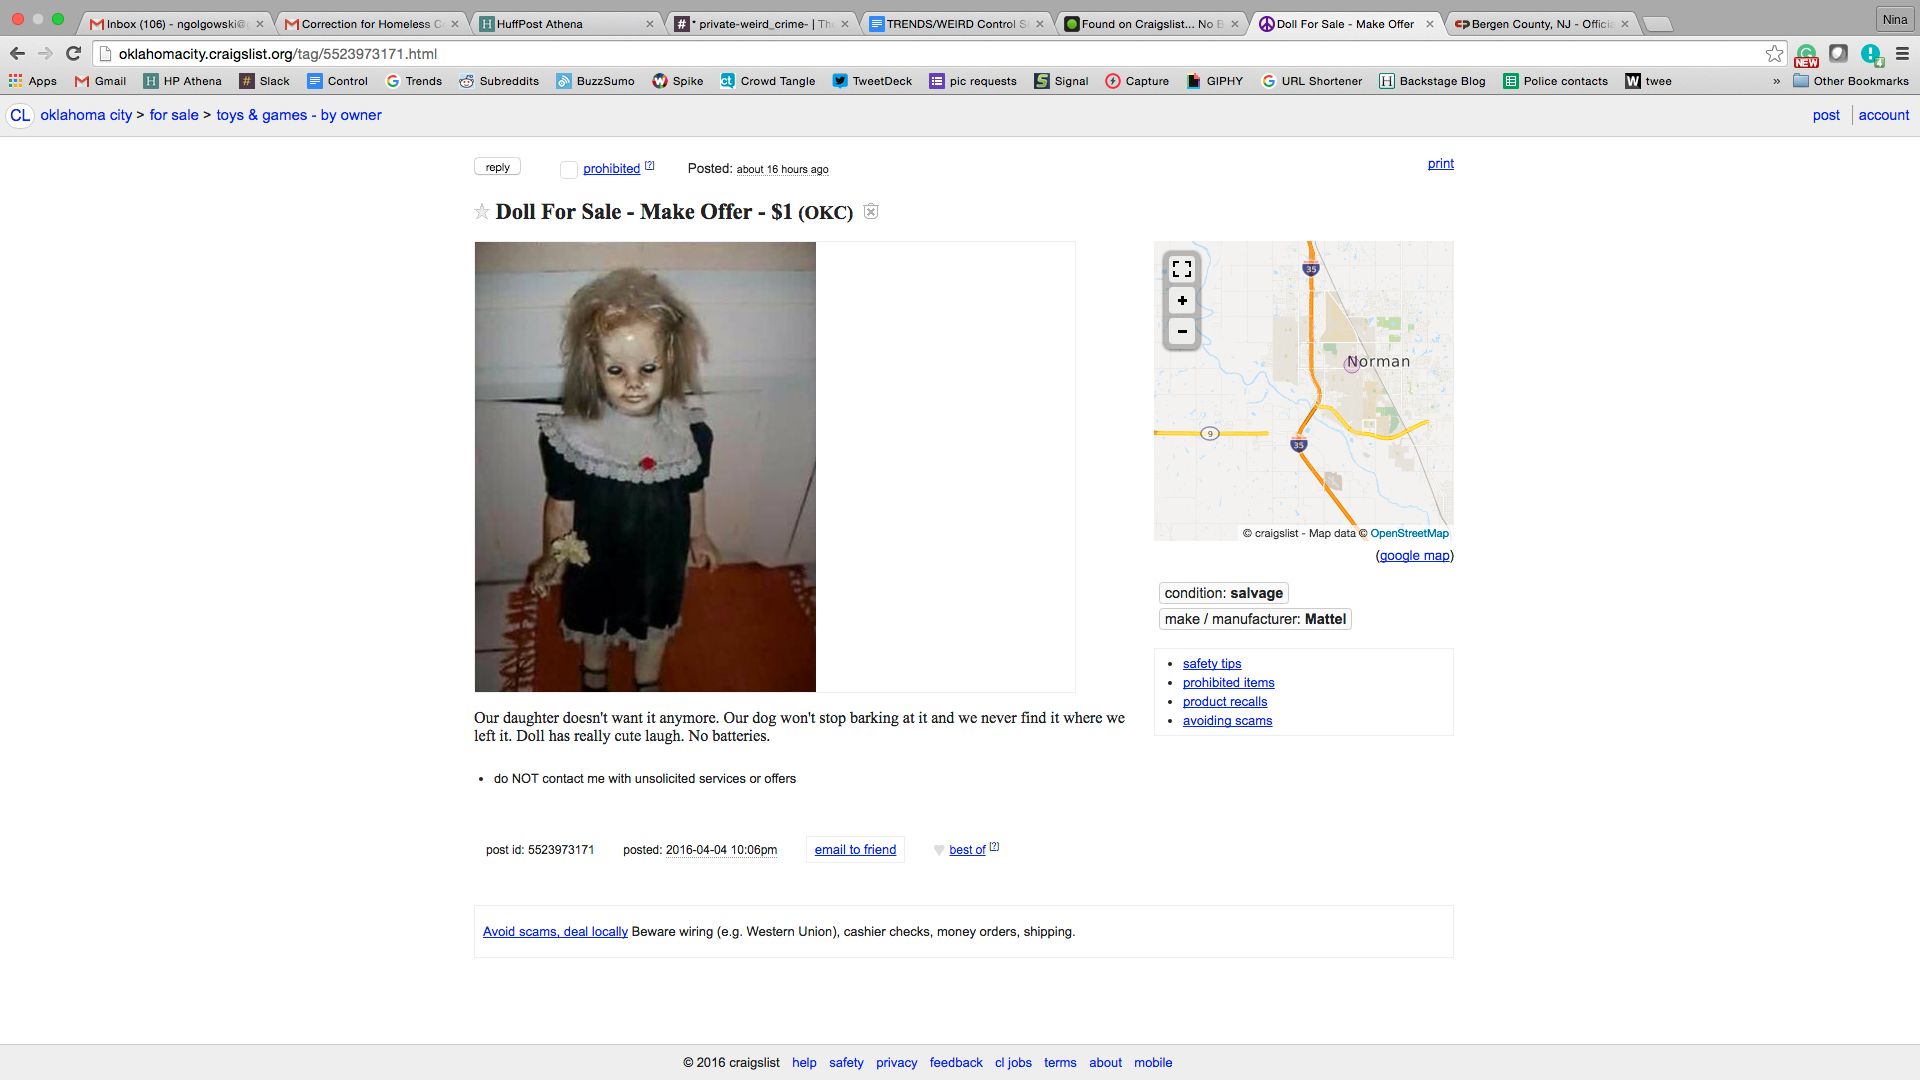 weird dolls for sale